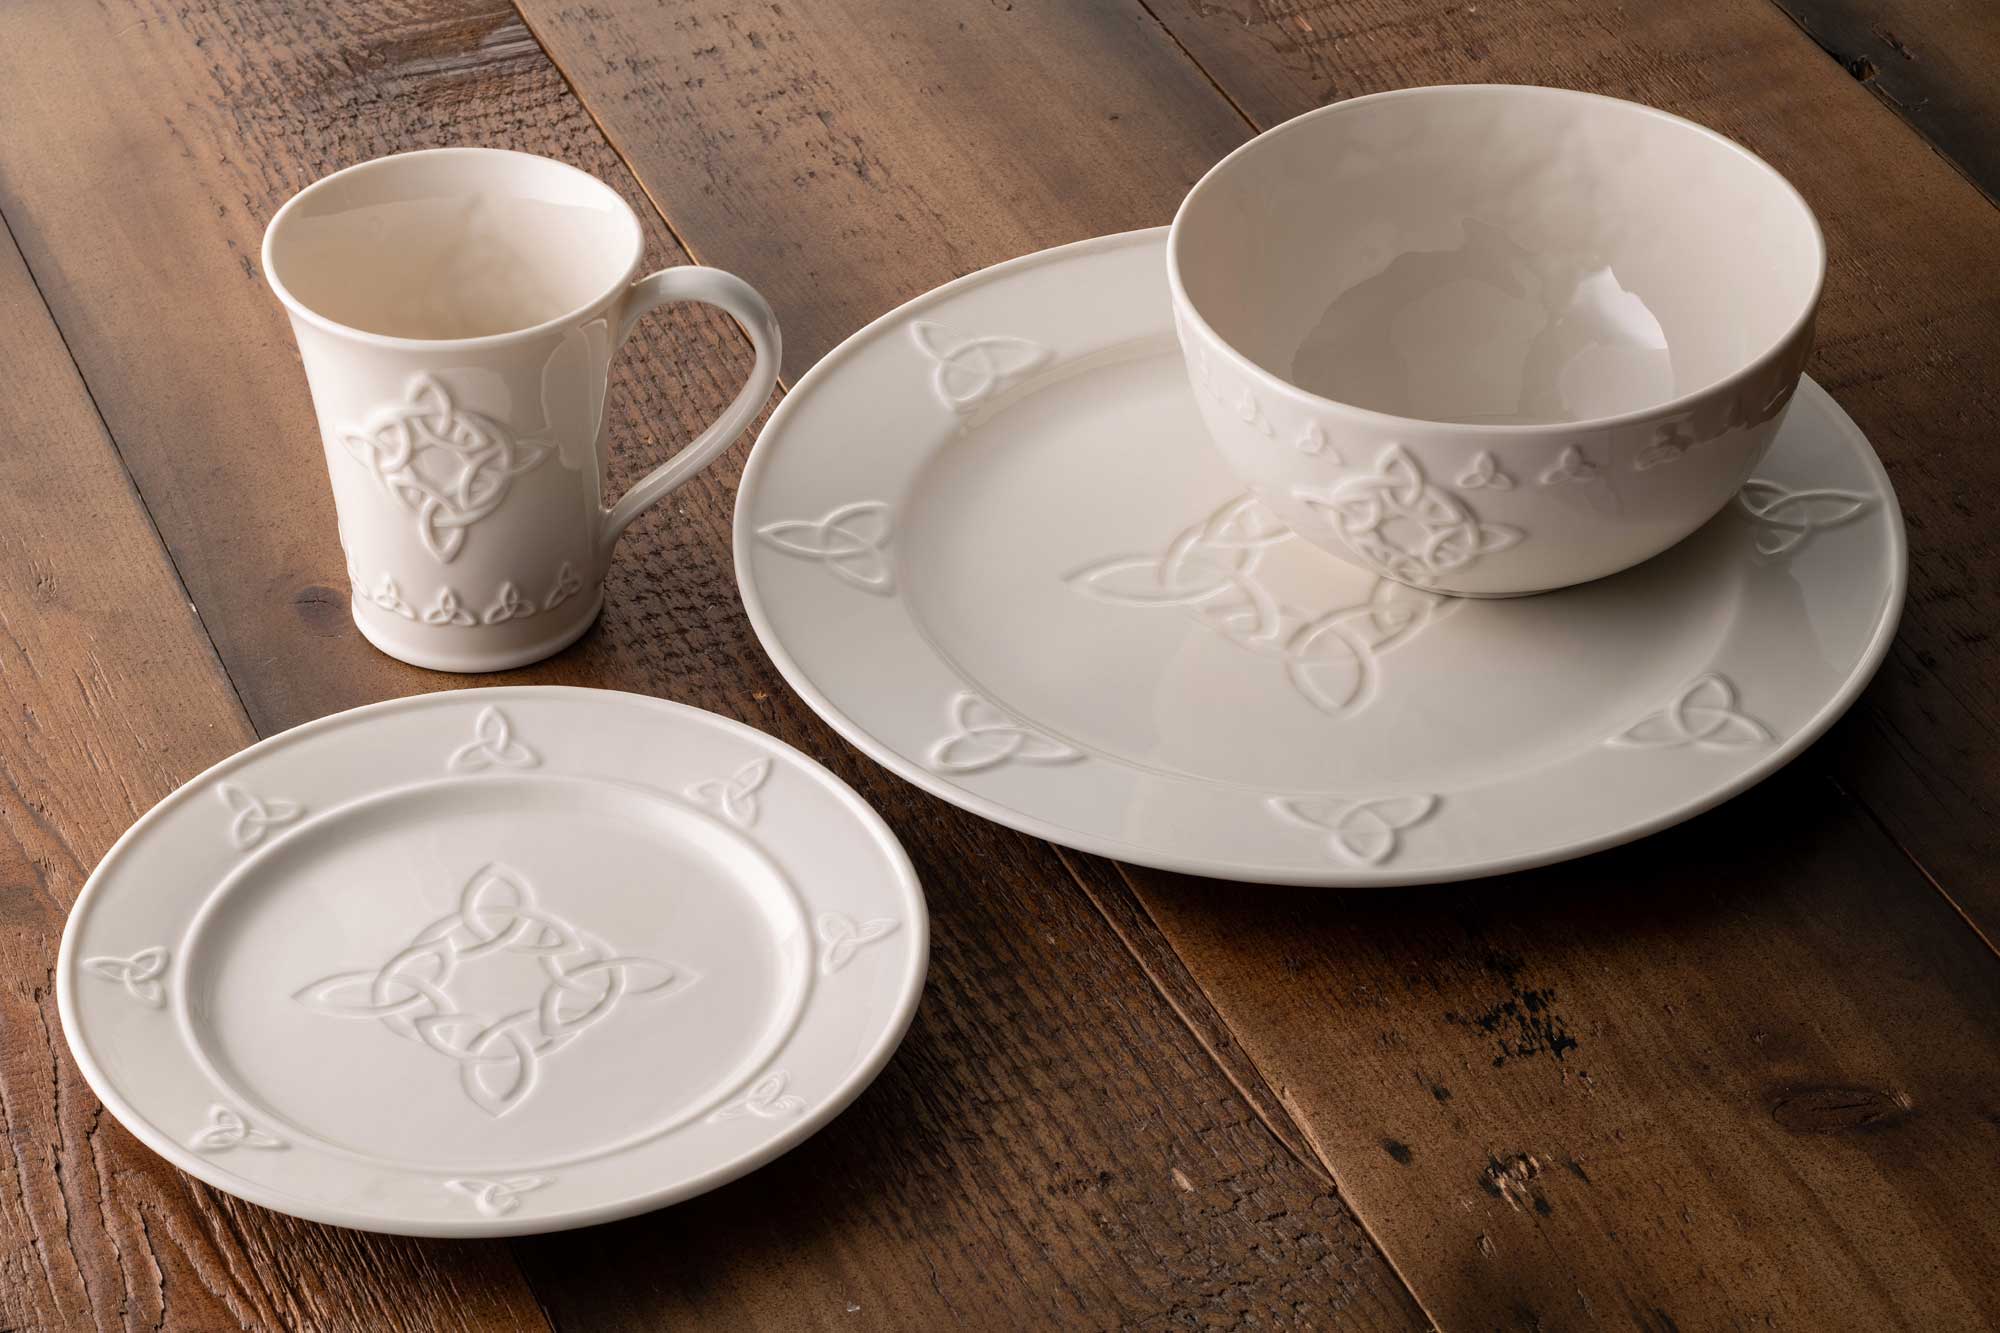 Product image for Celtic Trinity Knot Mugs Set of 2 | Belleek Irish Pottery